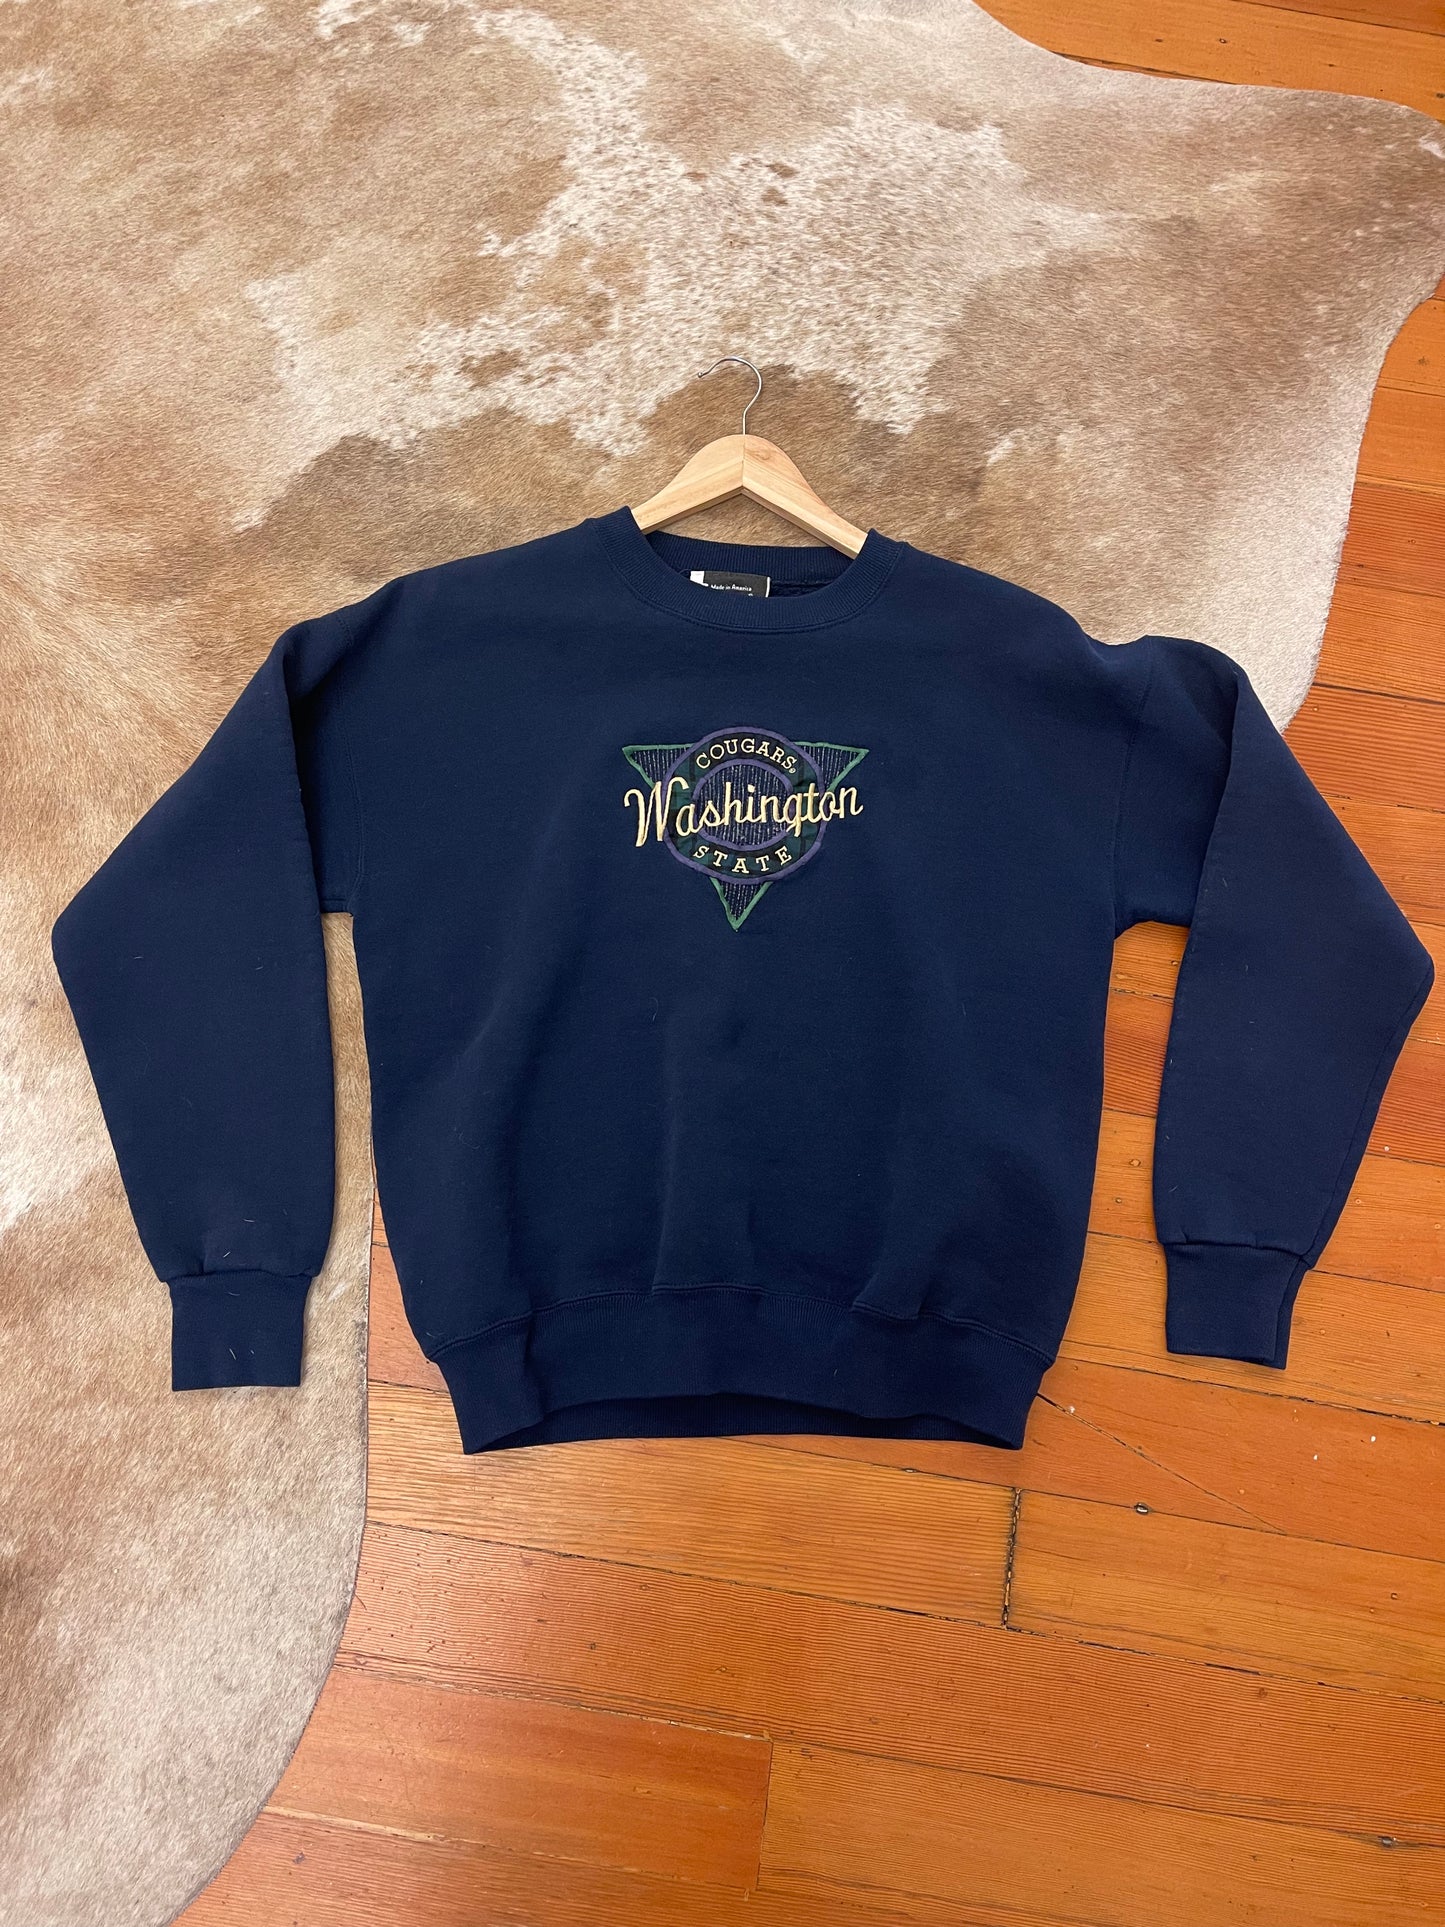 Vintage Washington State University Sweatshirt - M/L